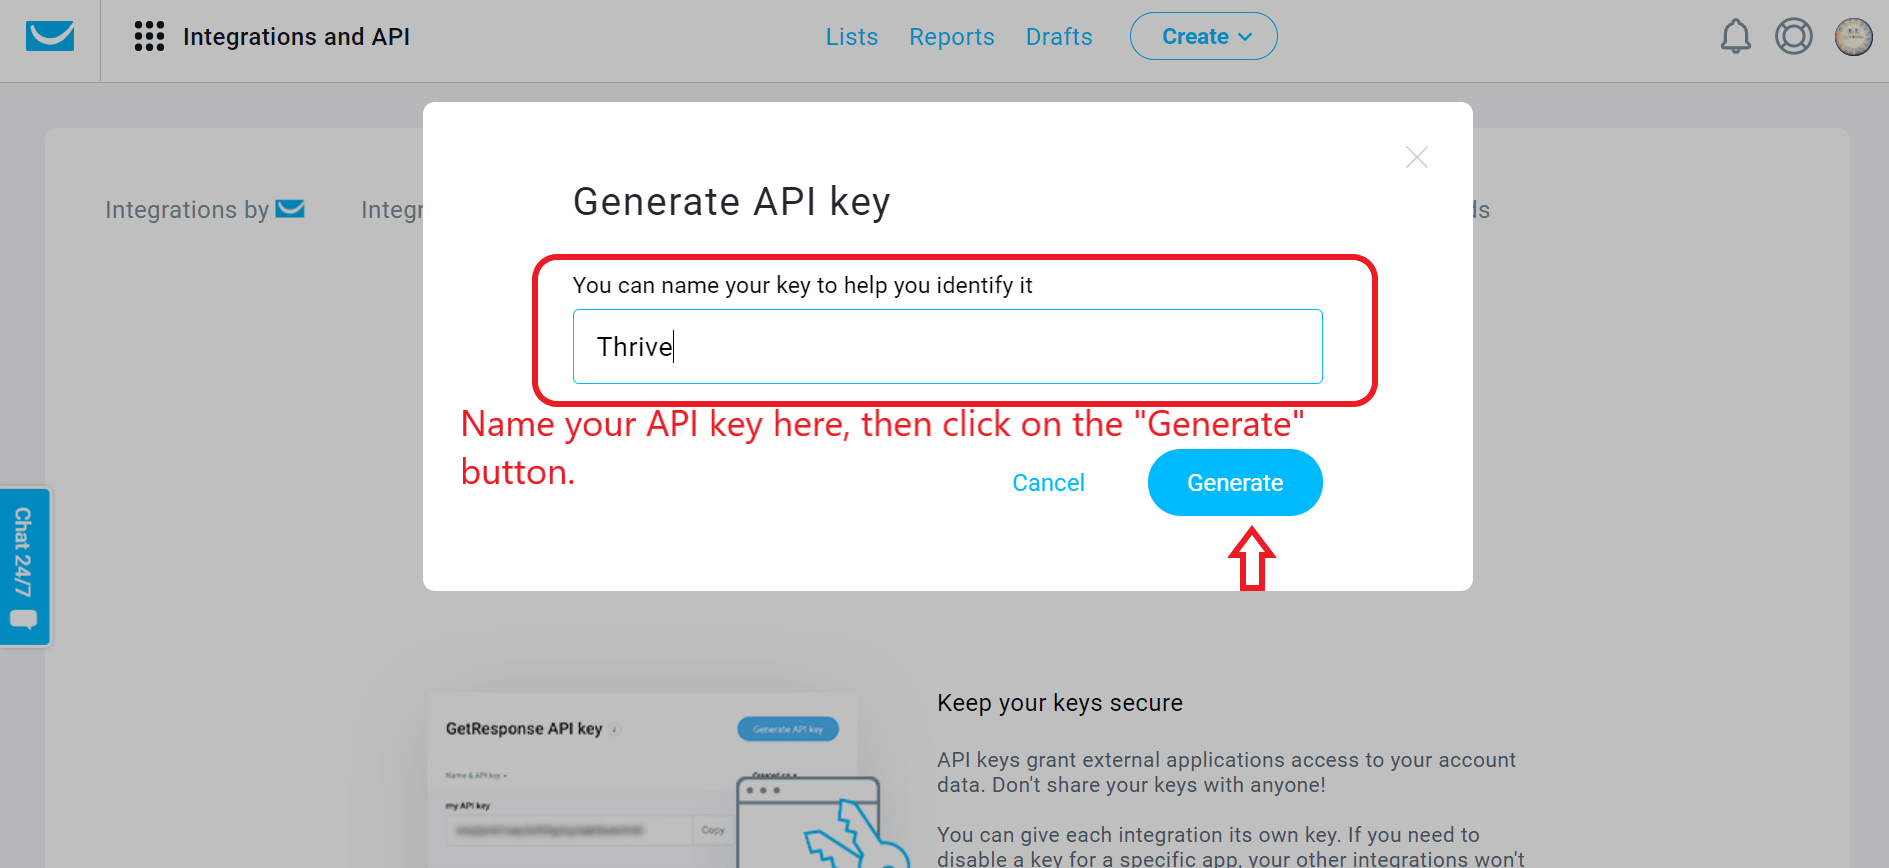  GetResponse API key